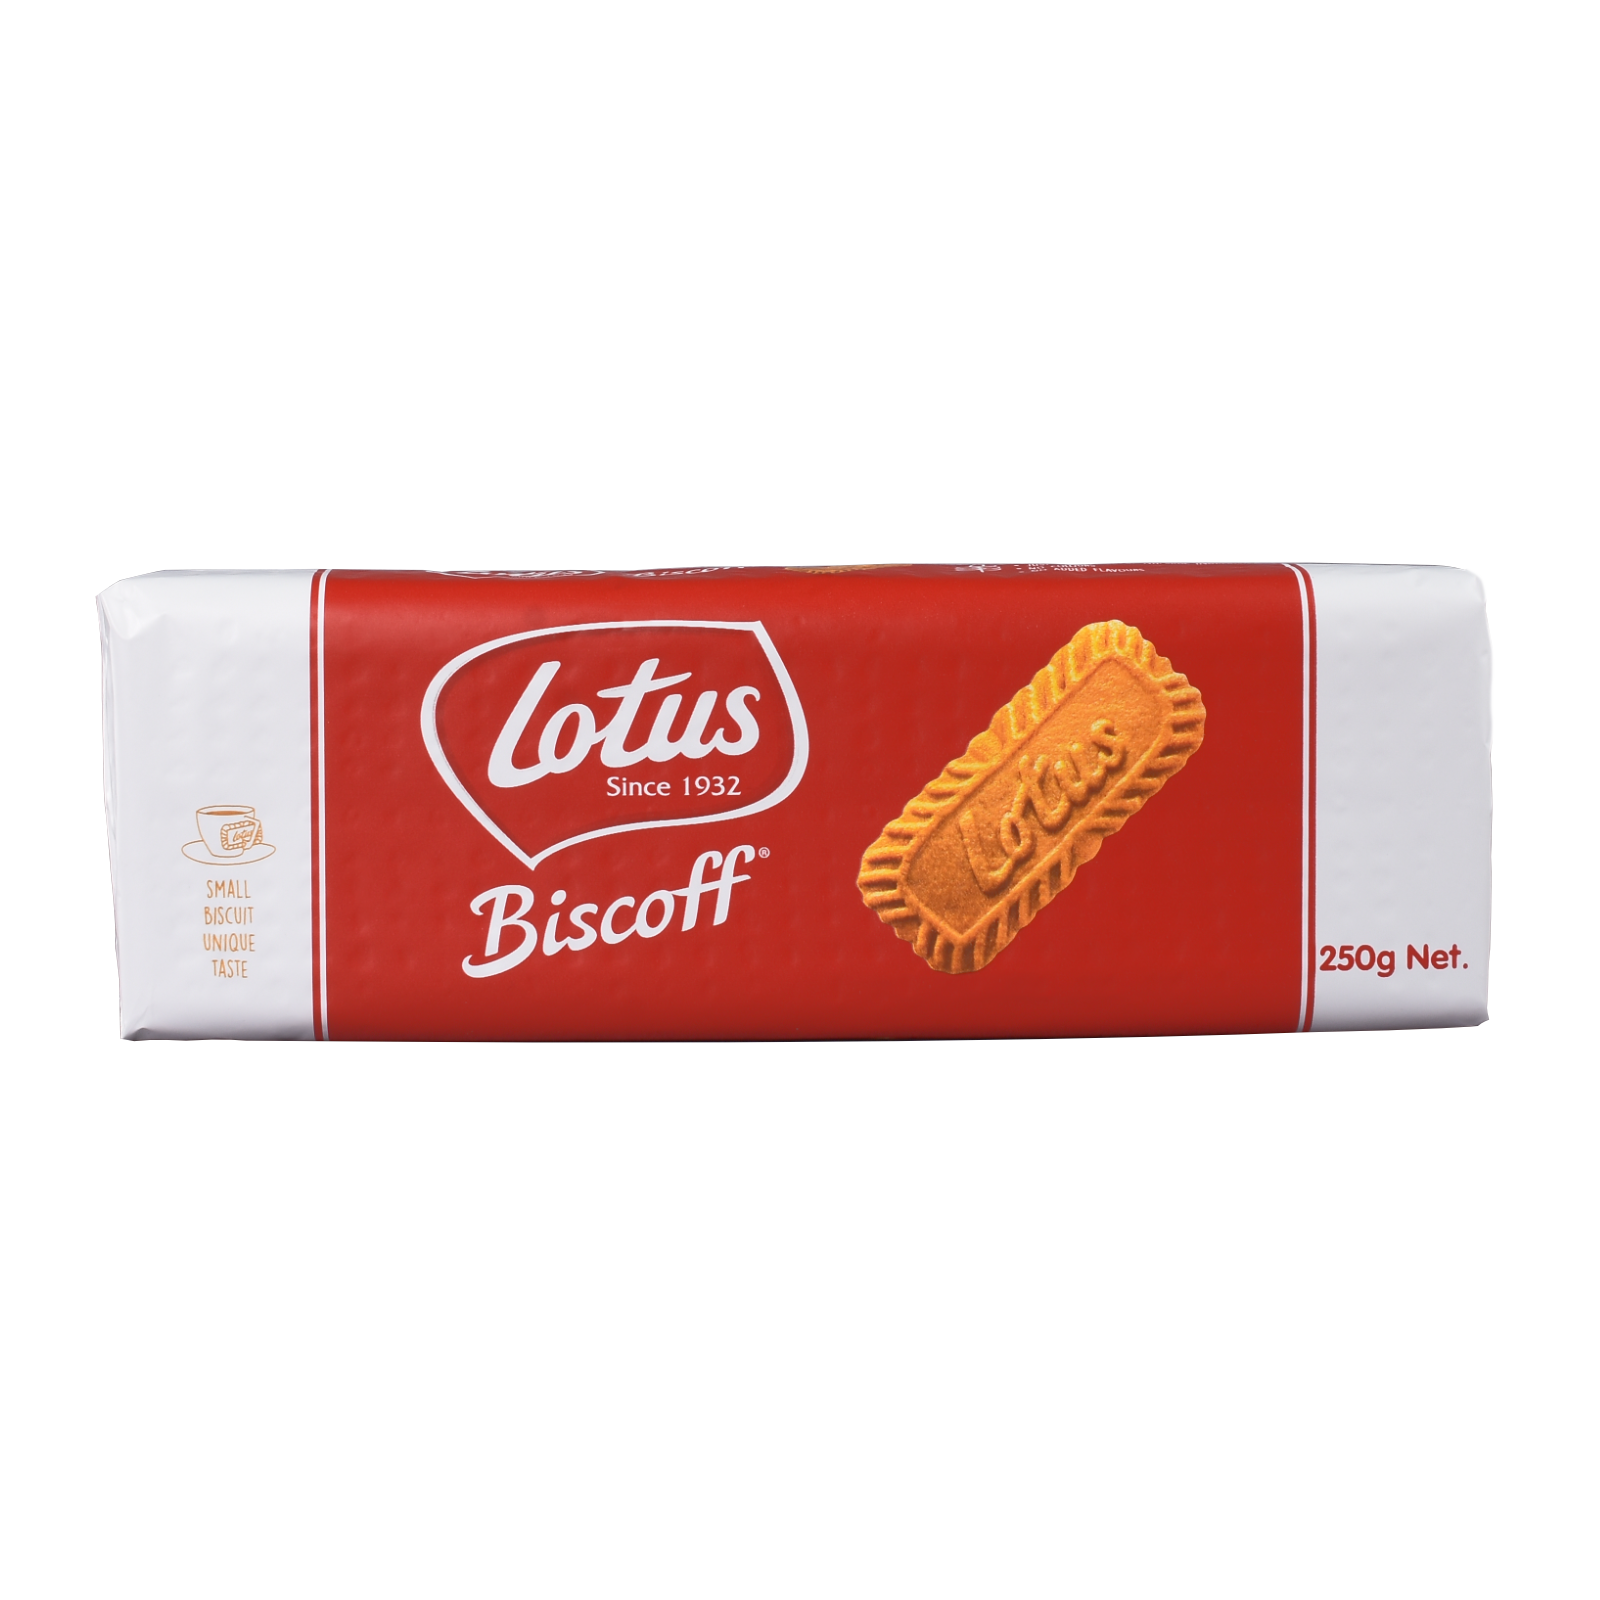 Lotus Biscoff Biscuit 250g.png